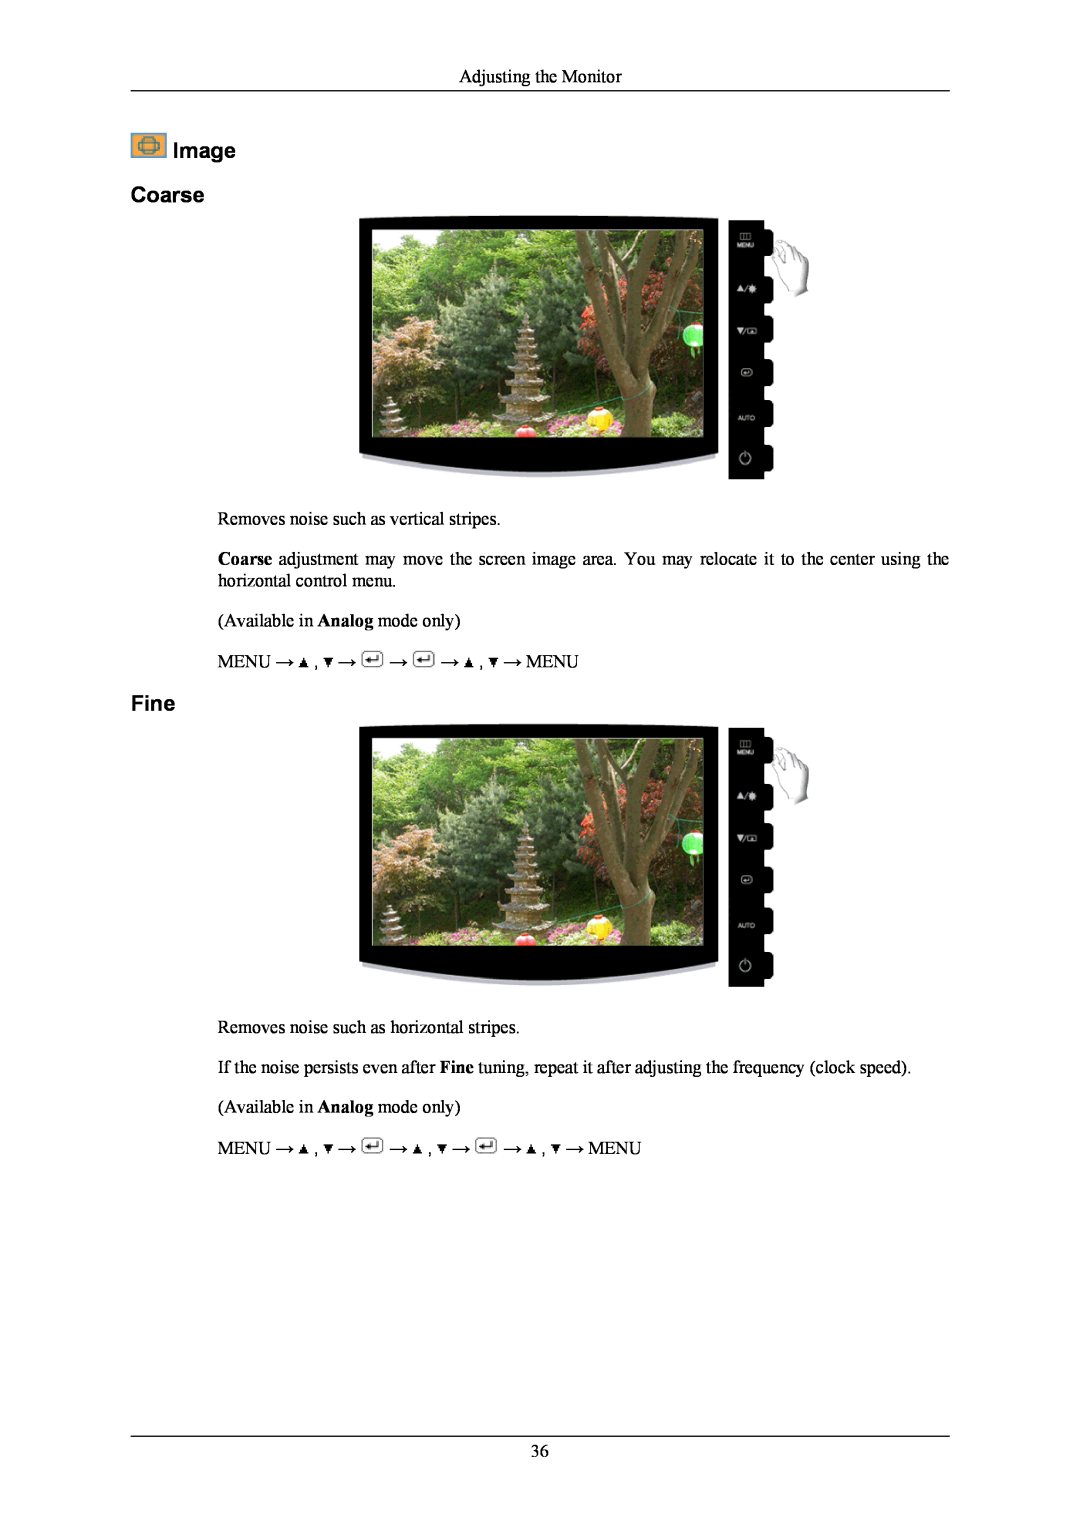 Samsung 2433BW user manual Image Coarse, Fine 